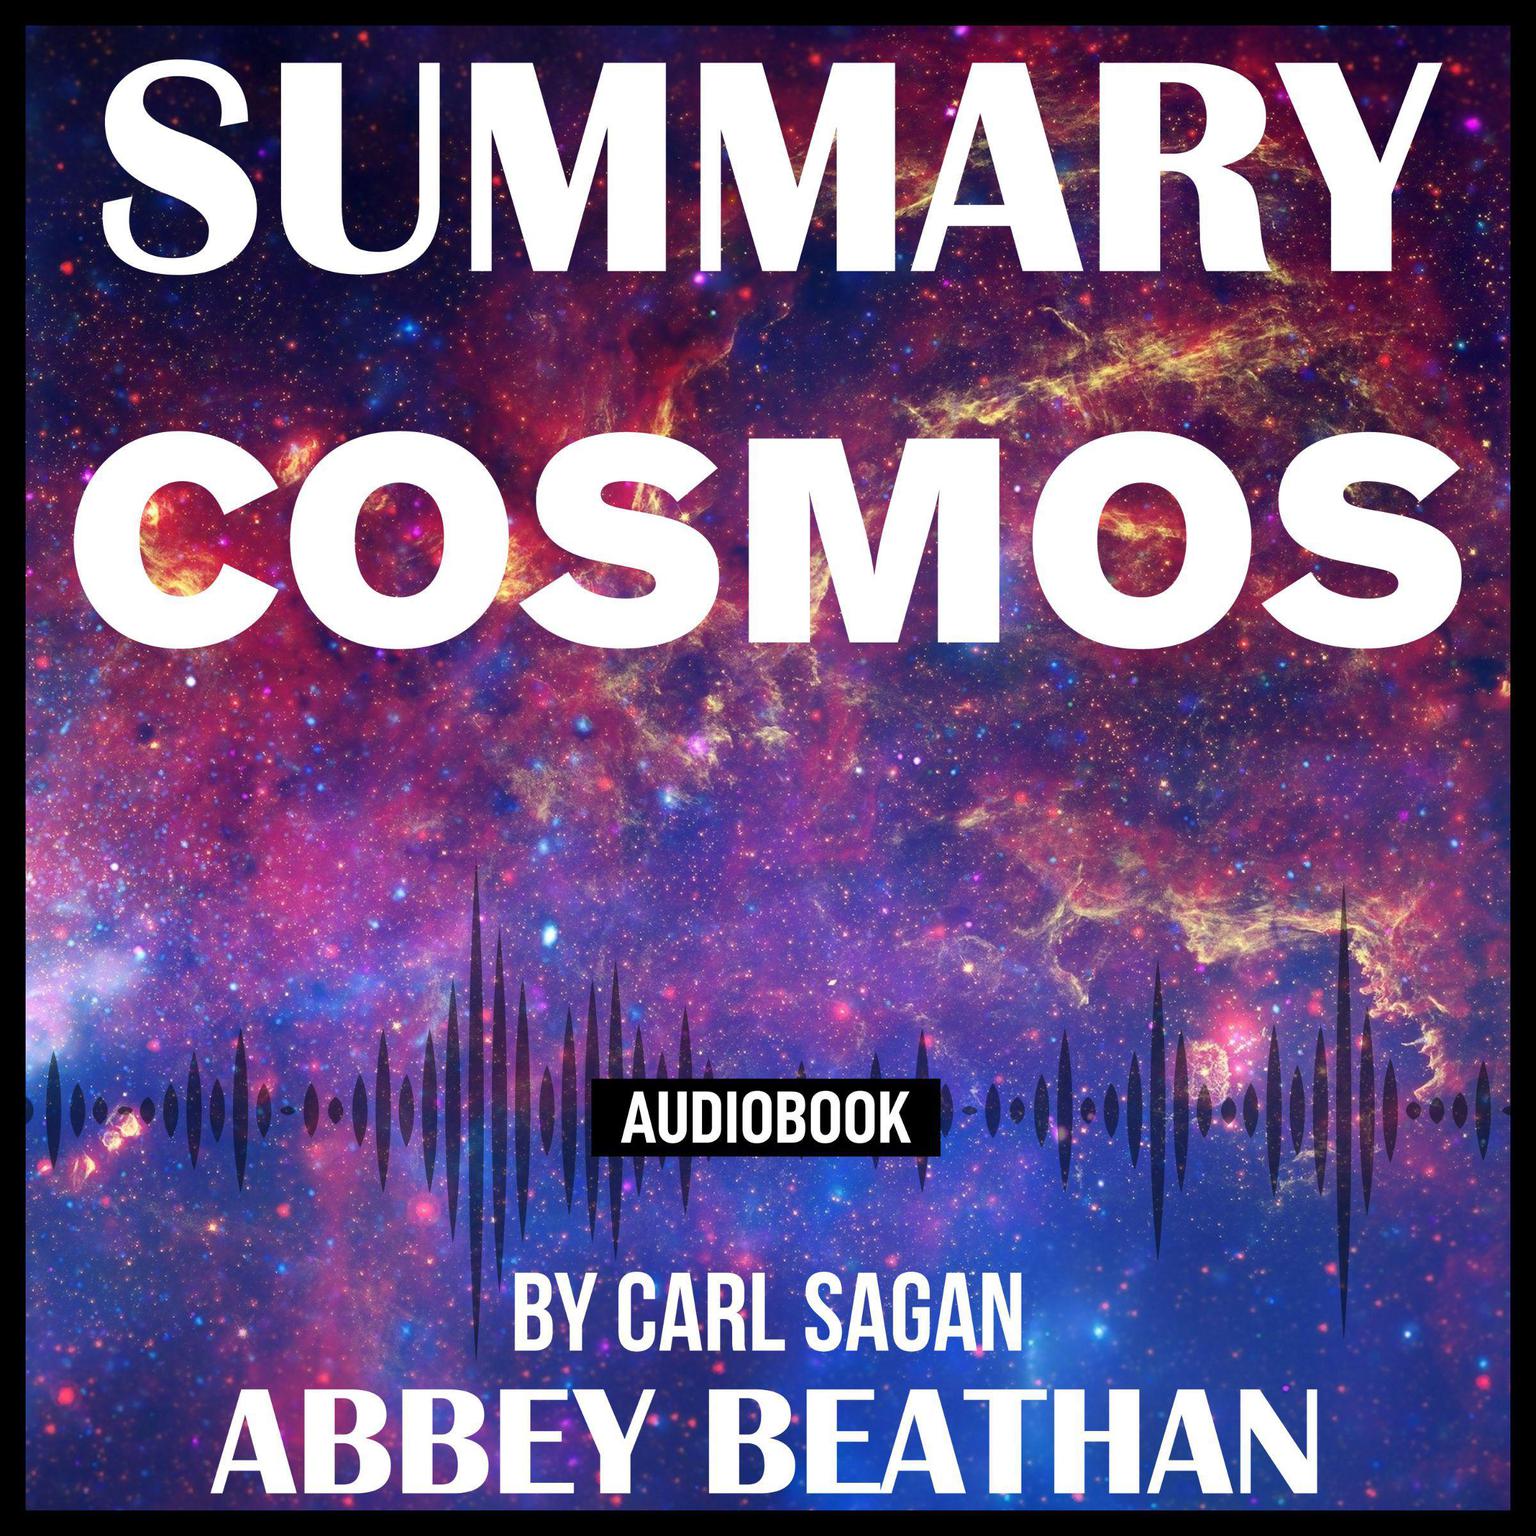 Summary of Cosmos by Carl Sagan Audiobook, by Abbey Beathan